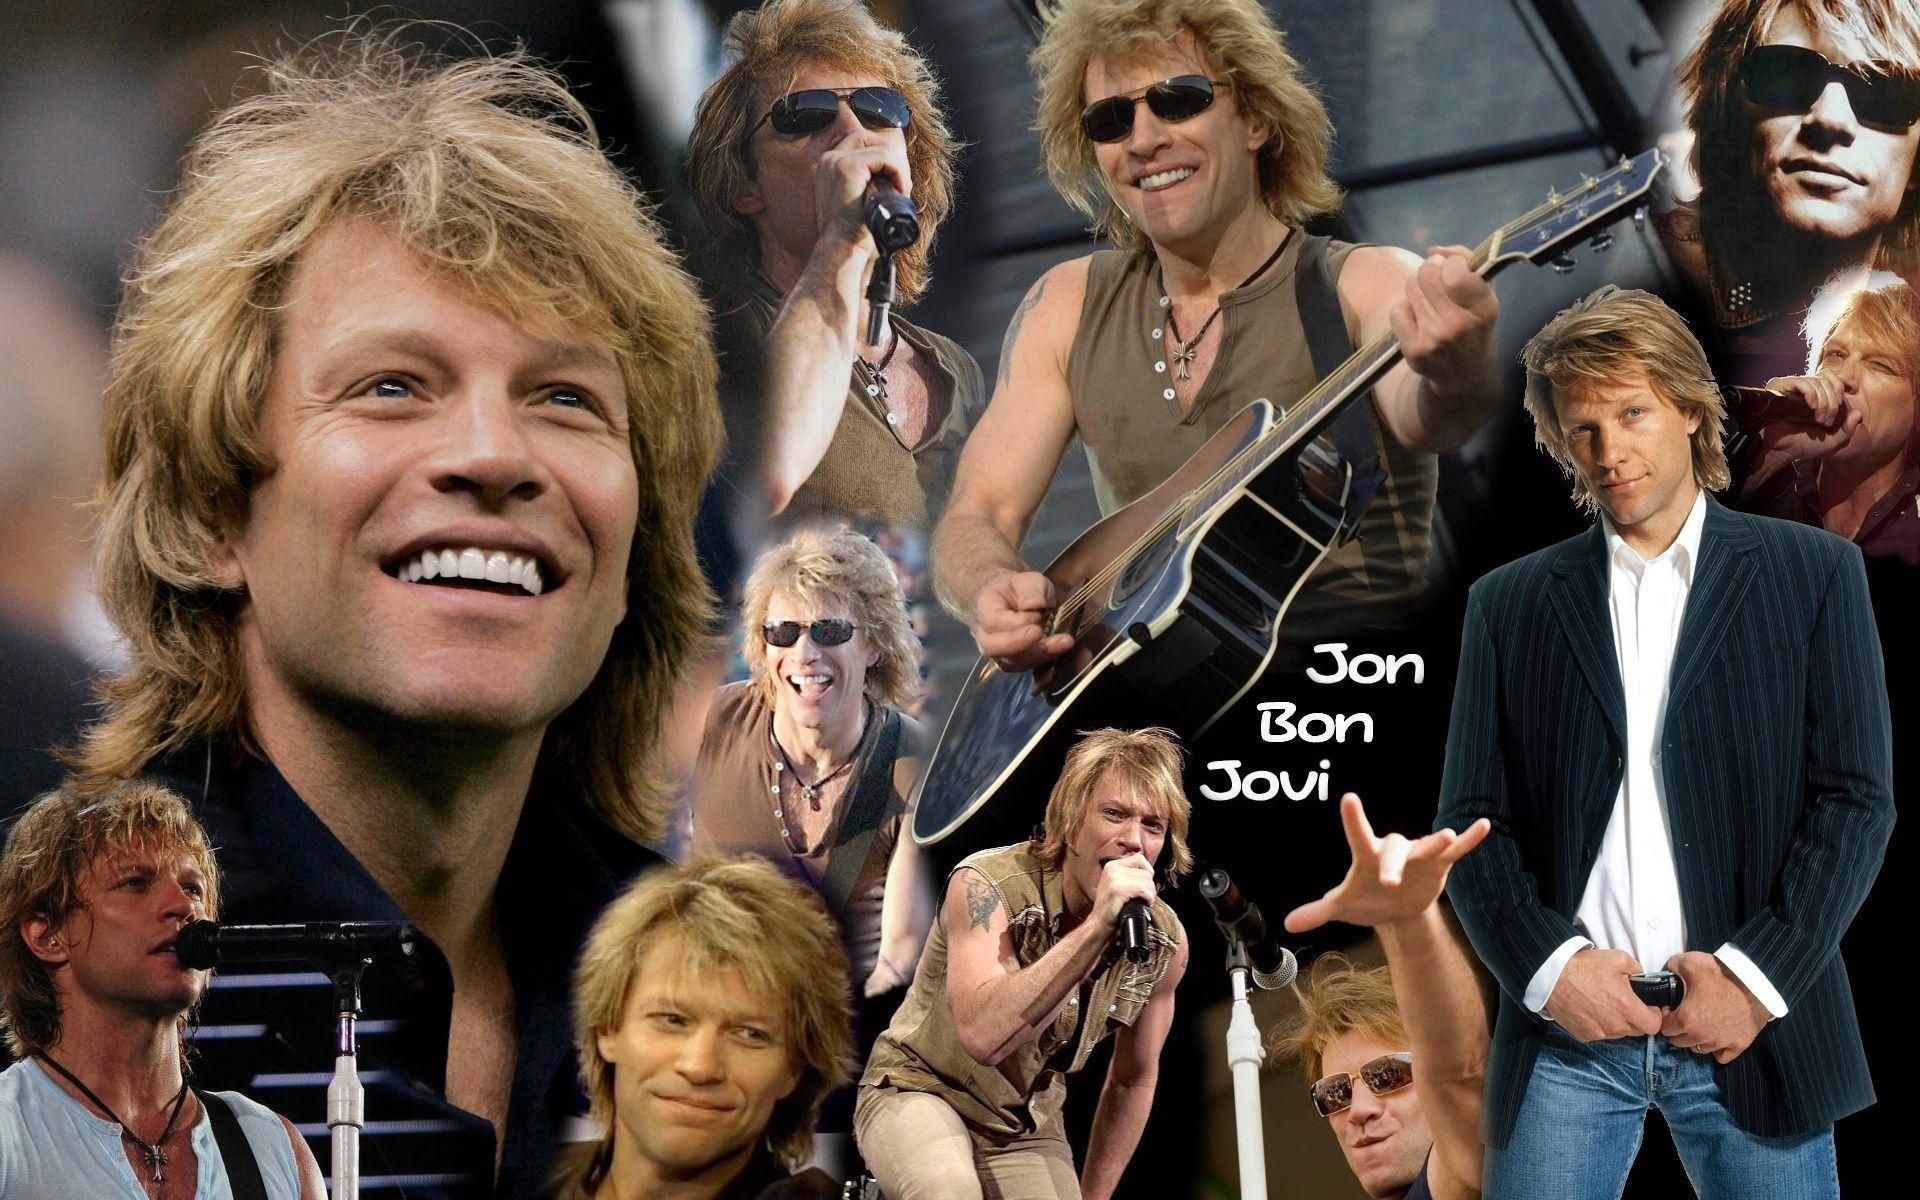 Jon Bon Jovi, Singer, Hard Rock, Heavy Metal, Guitar